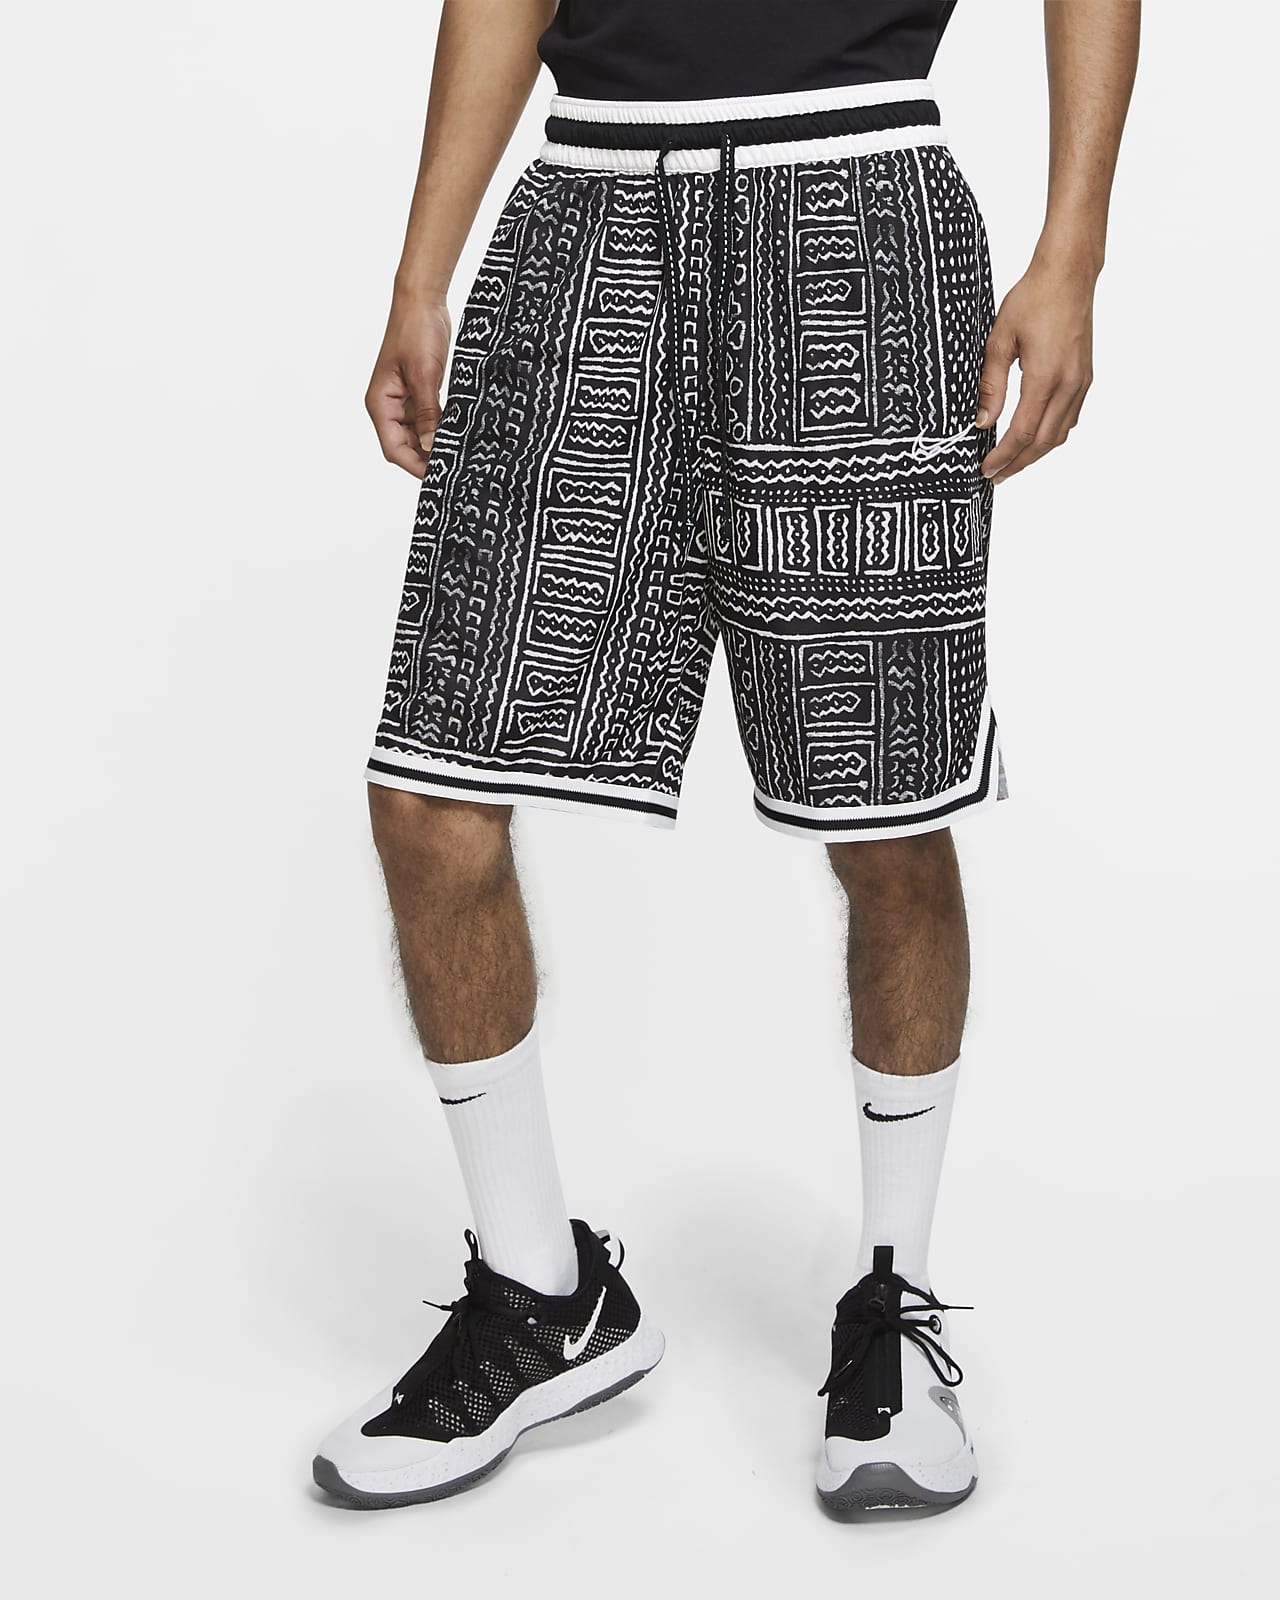 Shorts de básquetbol para hombre Nike DNA. Nike.com